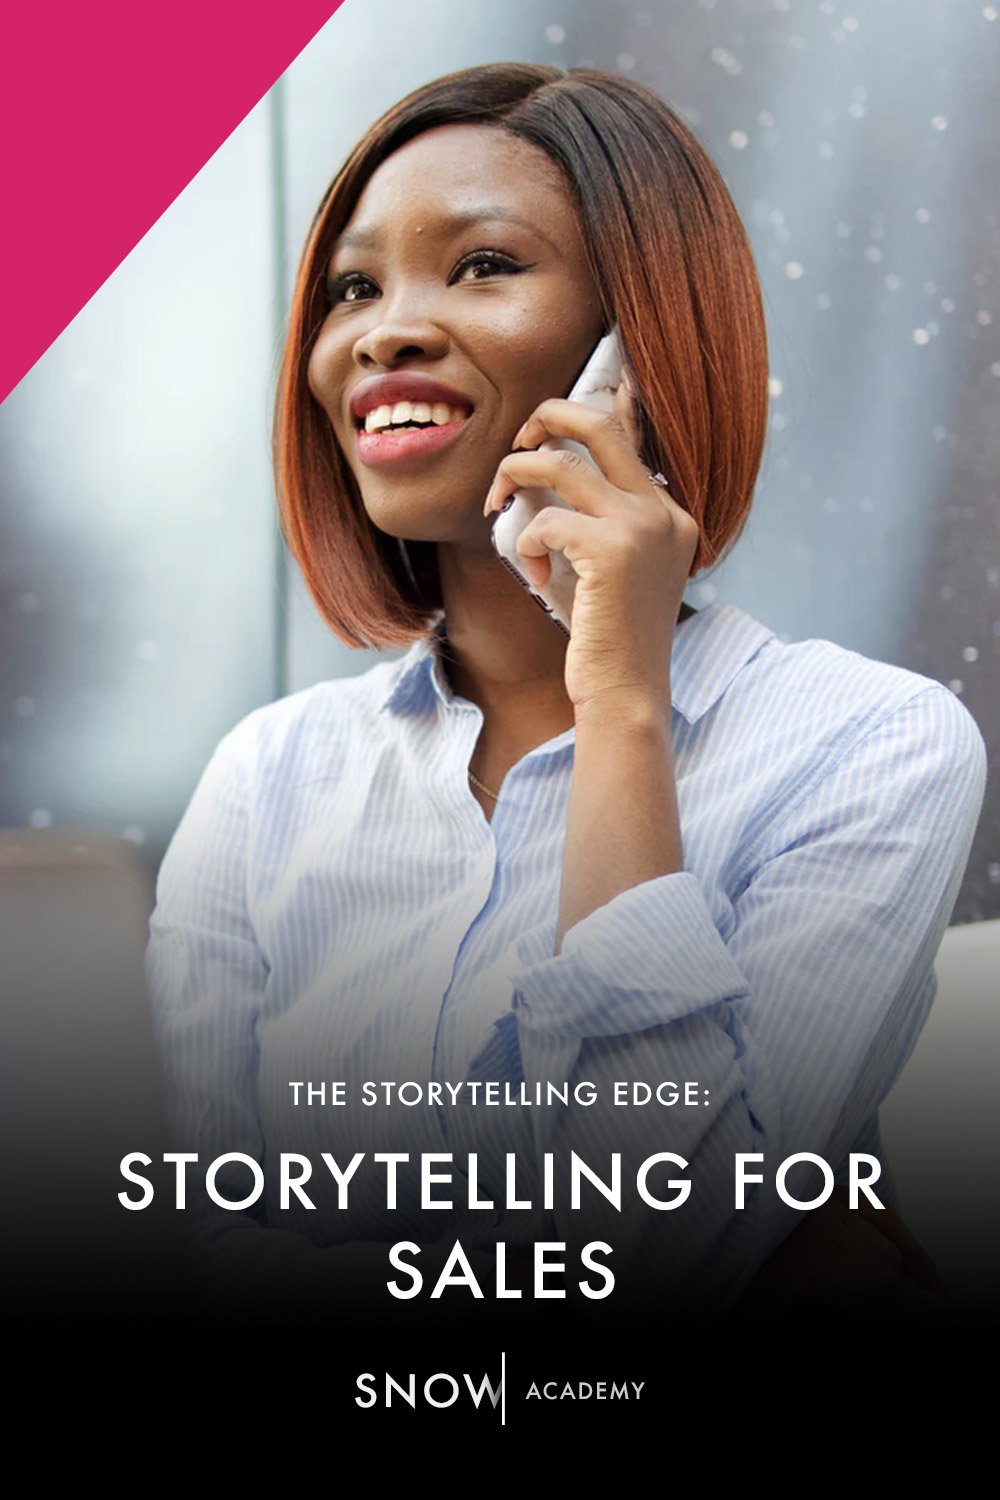 The Storytelling Edge: Storytelling for Sales